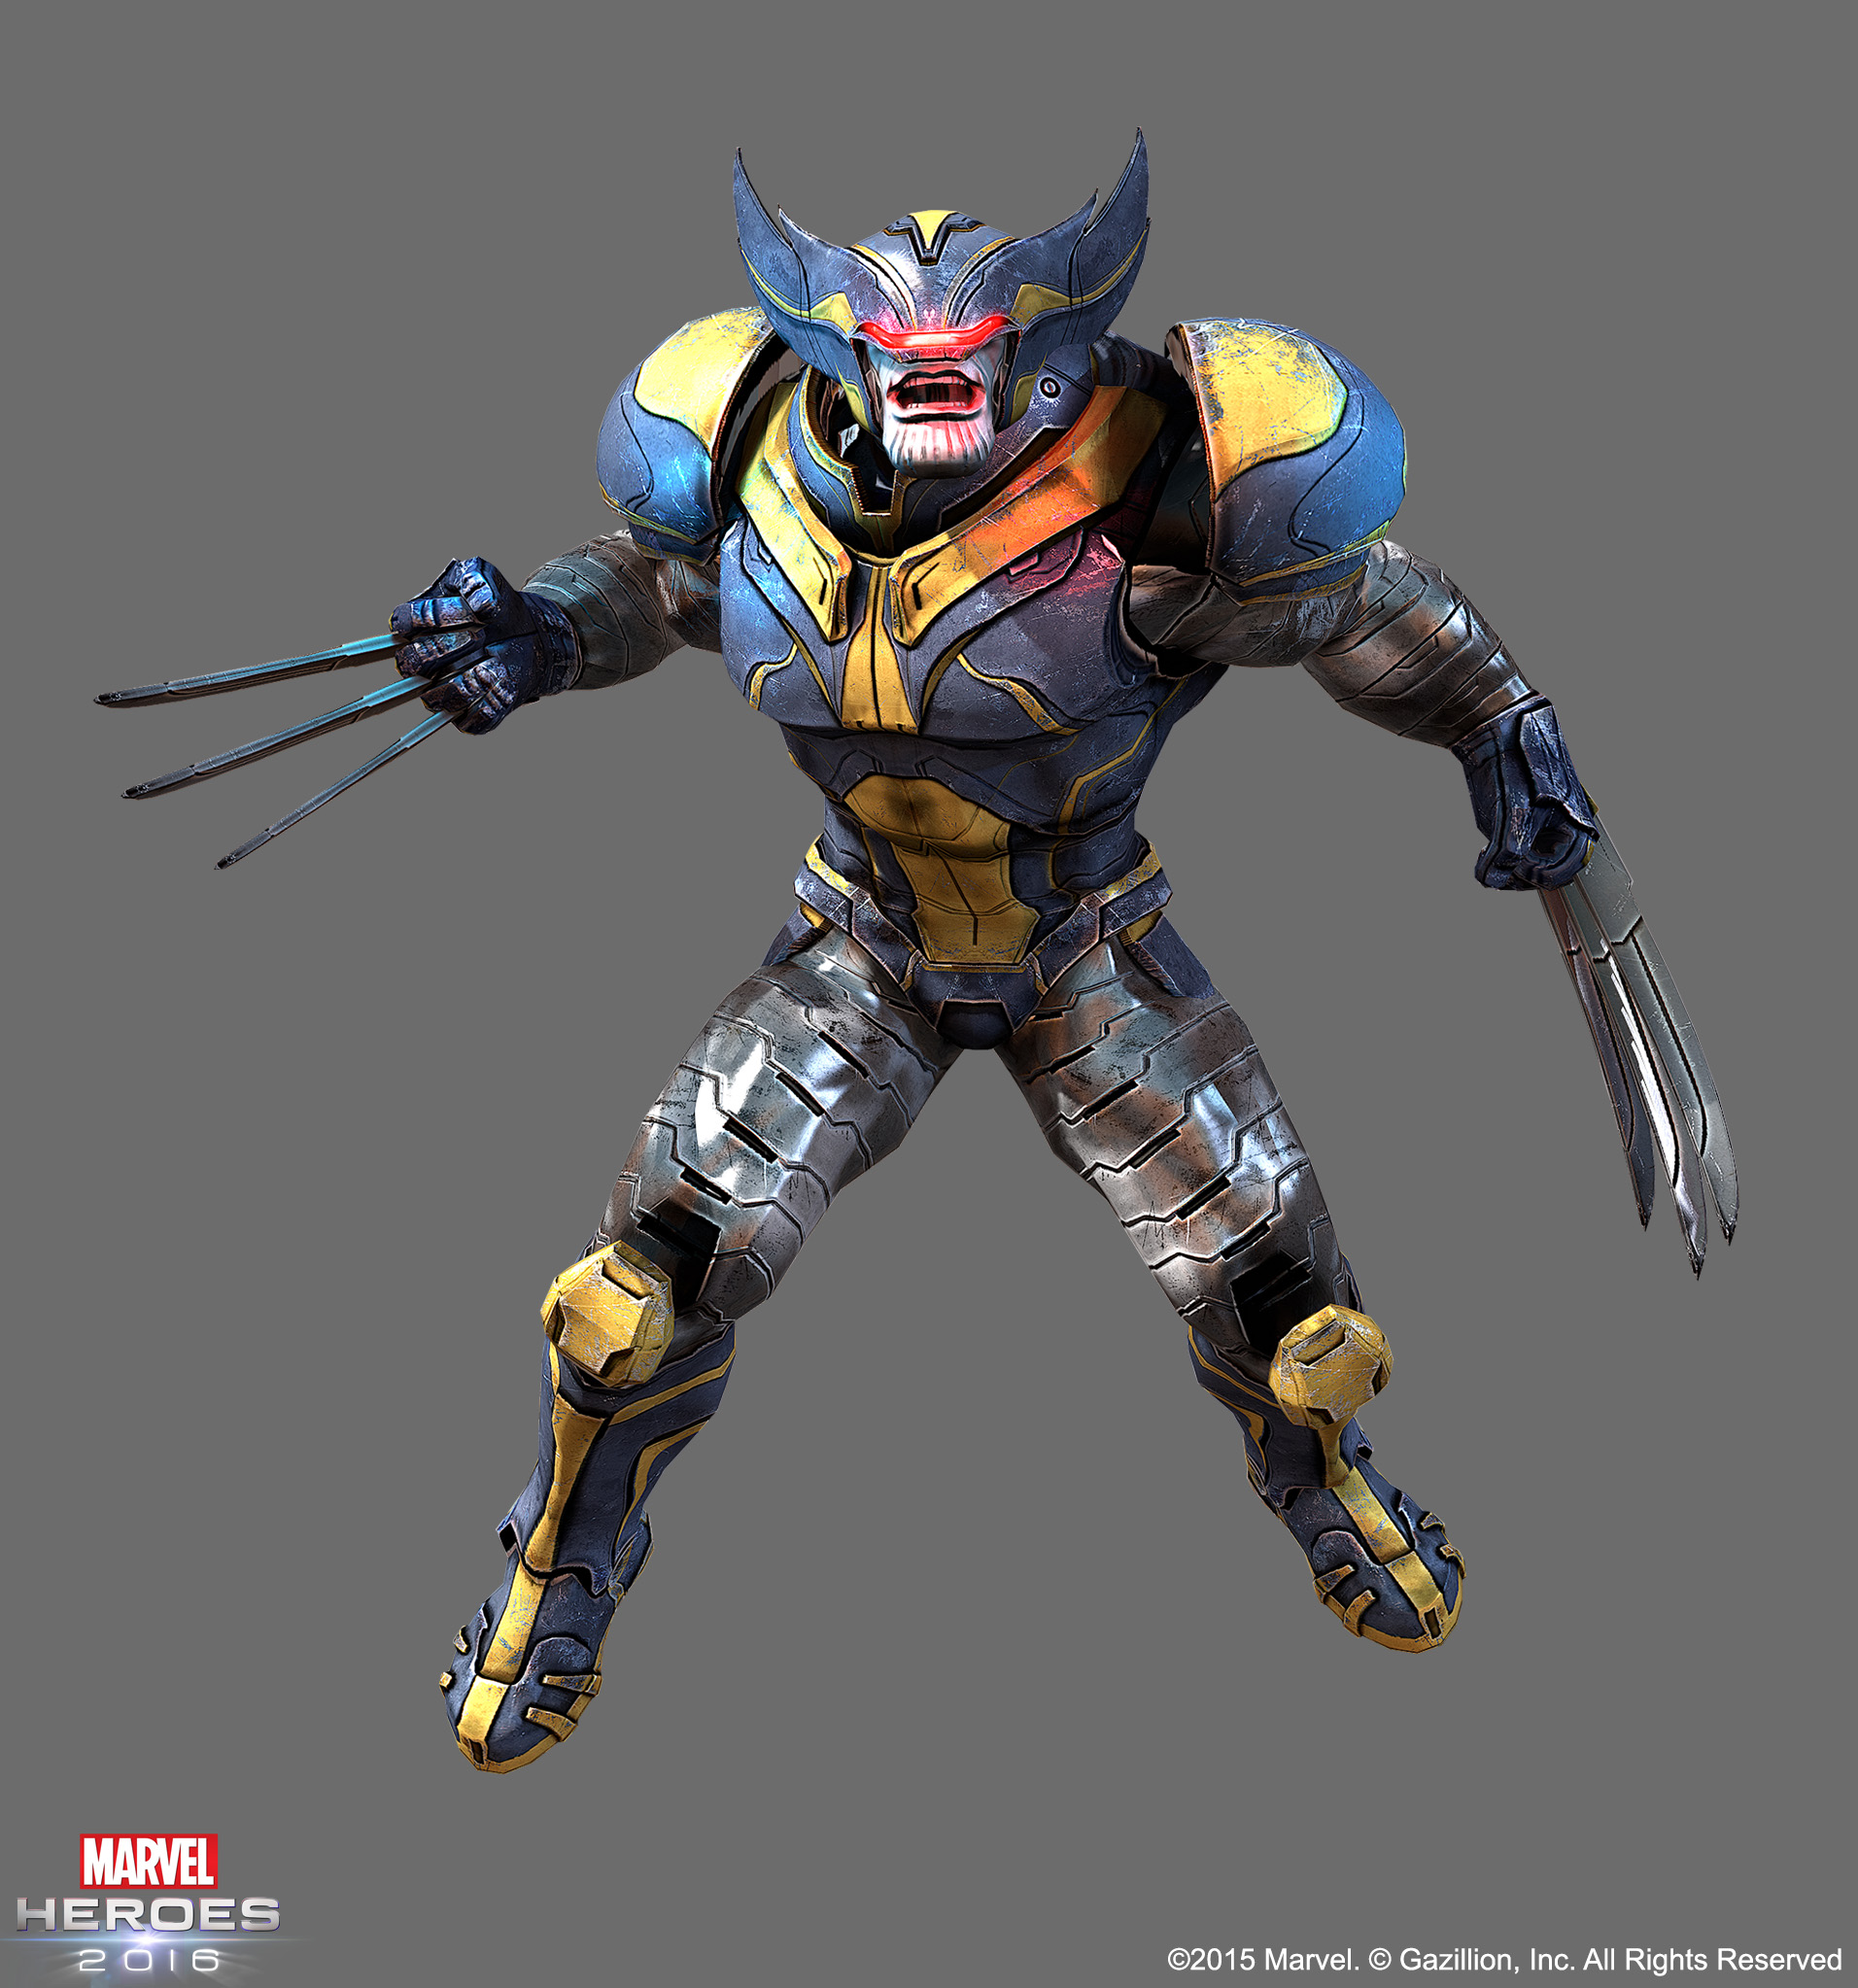 MH2016 WarSkrull XMen NYCC 2015: Marvel Heroes 2016 Announced